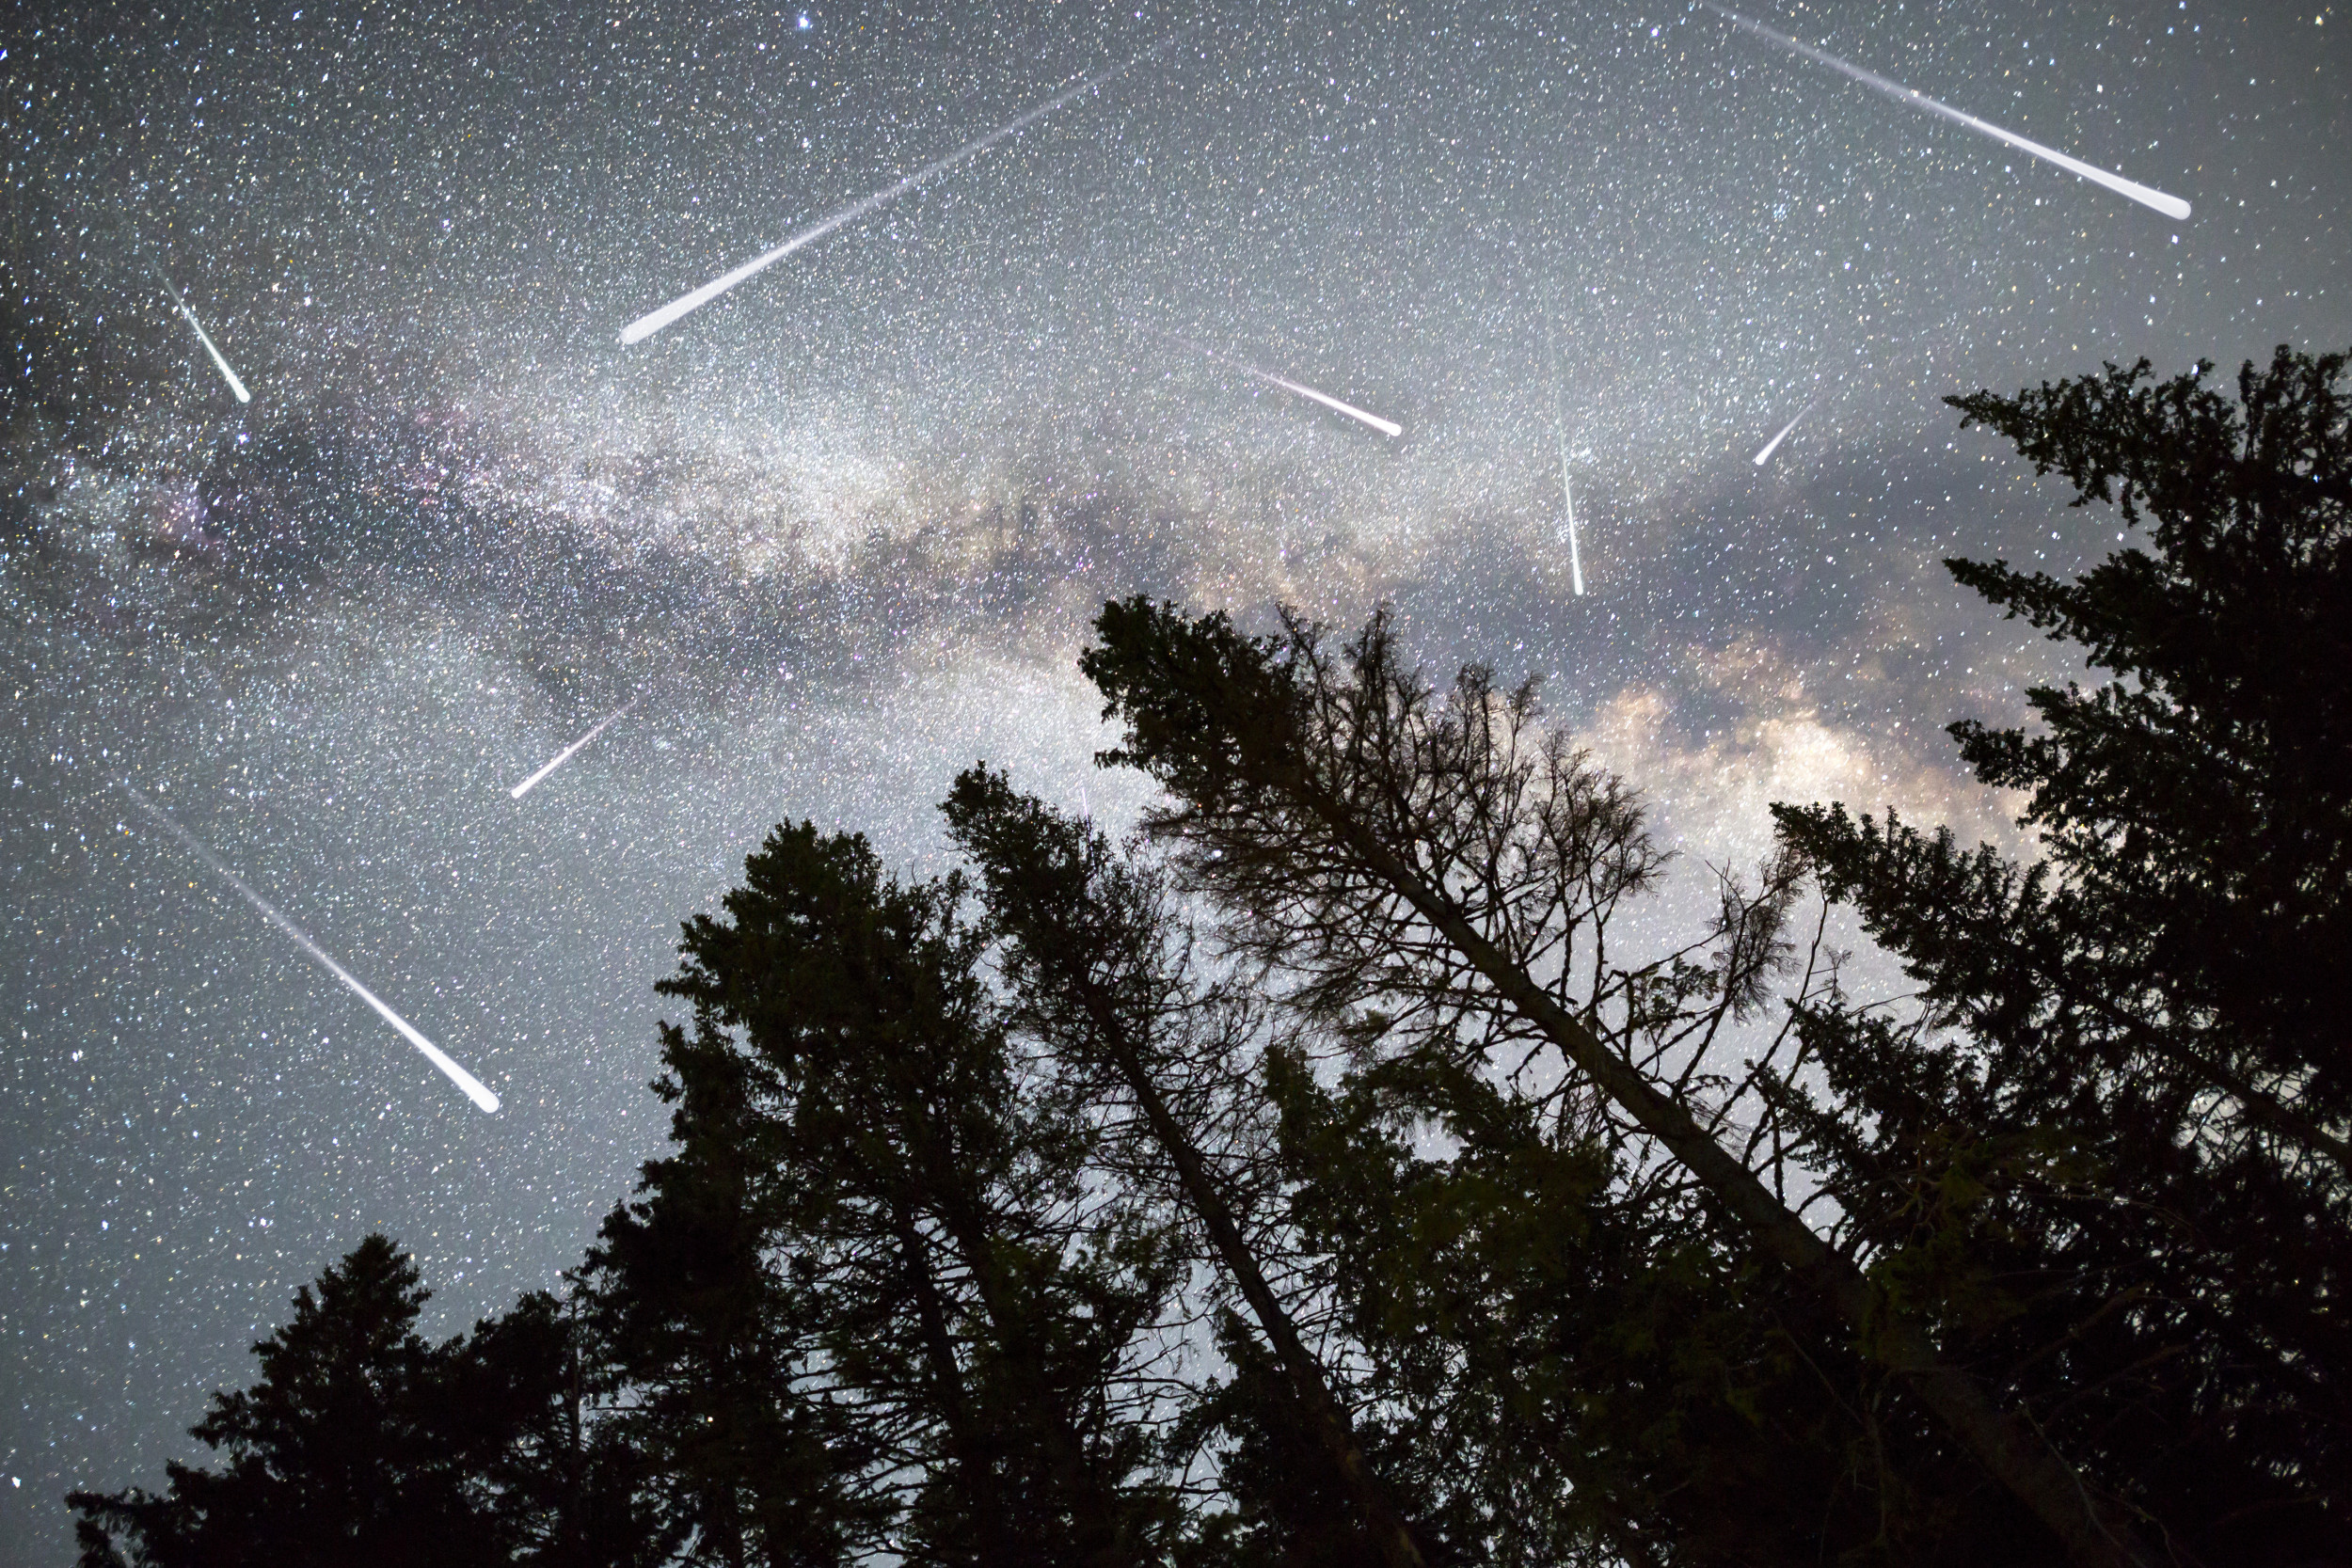 Taurid Meteor Shower Set to Bring Swarm of Halloween Fireballs This Year